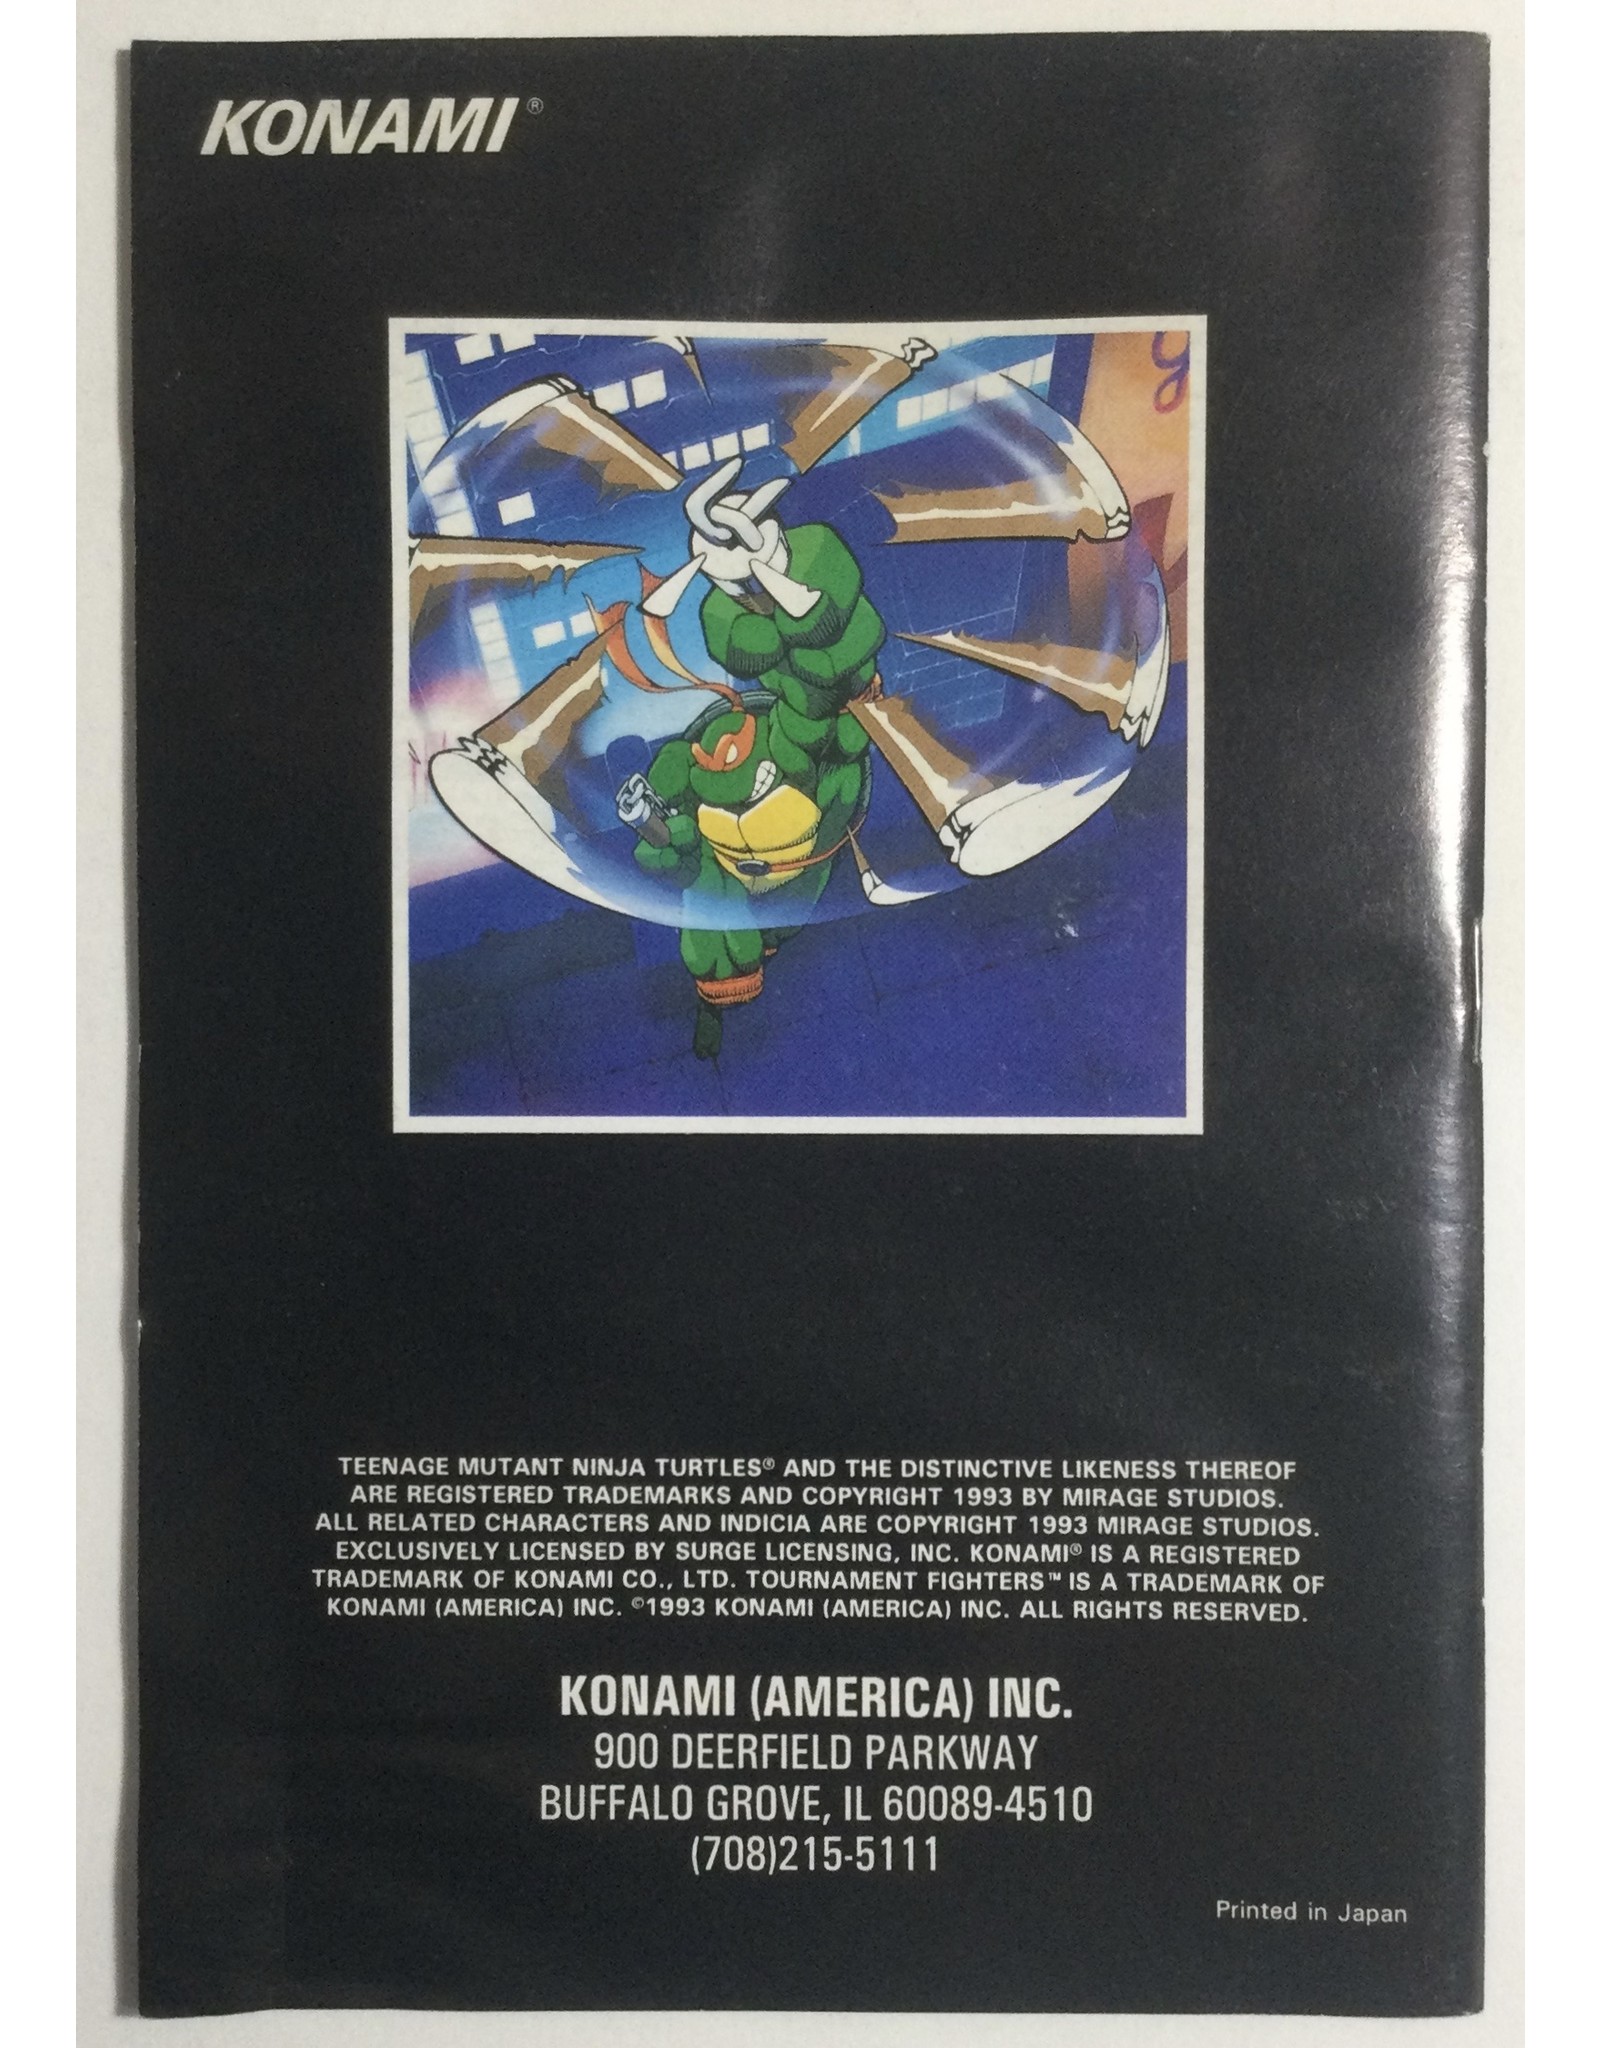 KONAMI Teenage Mutant Ninja Turtles Tournament Fighters for Super Nintendo Entertainment System (SNES)